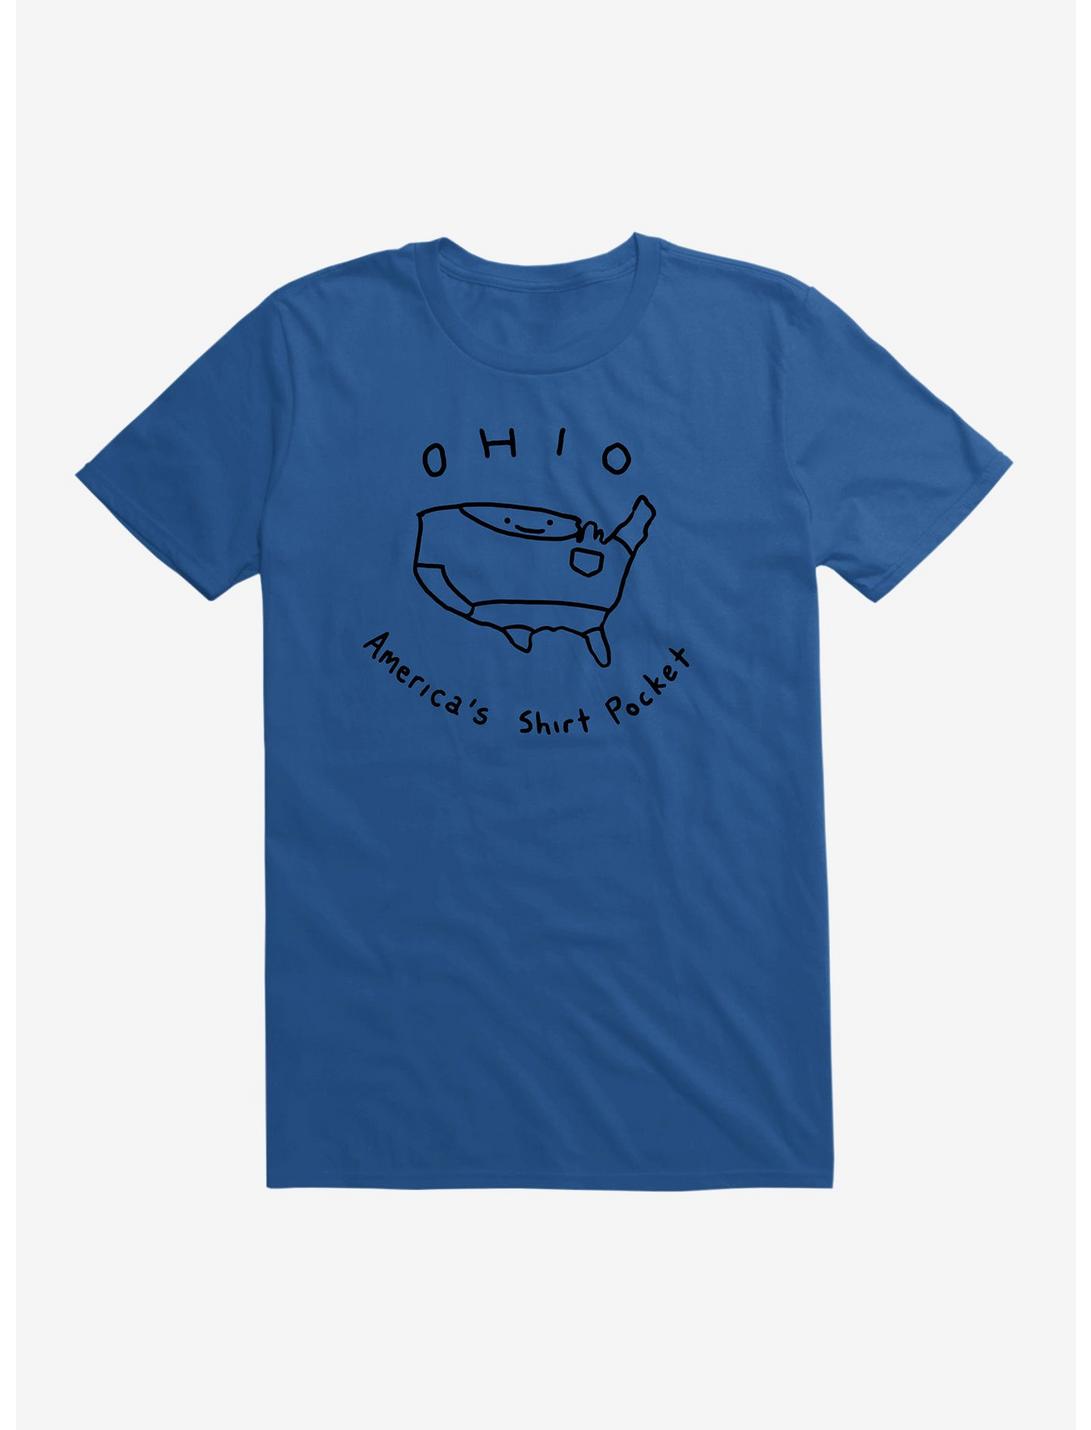 Ohio America's Shirt Pocket T-Shirt, ROYAL, hi-res